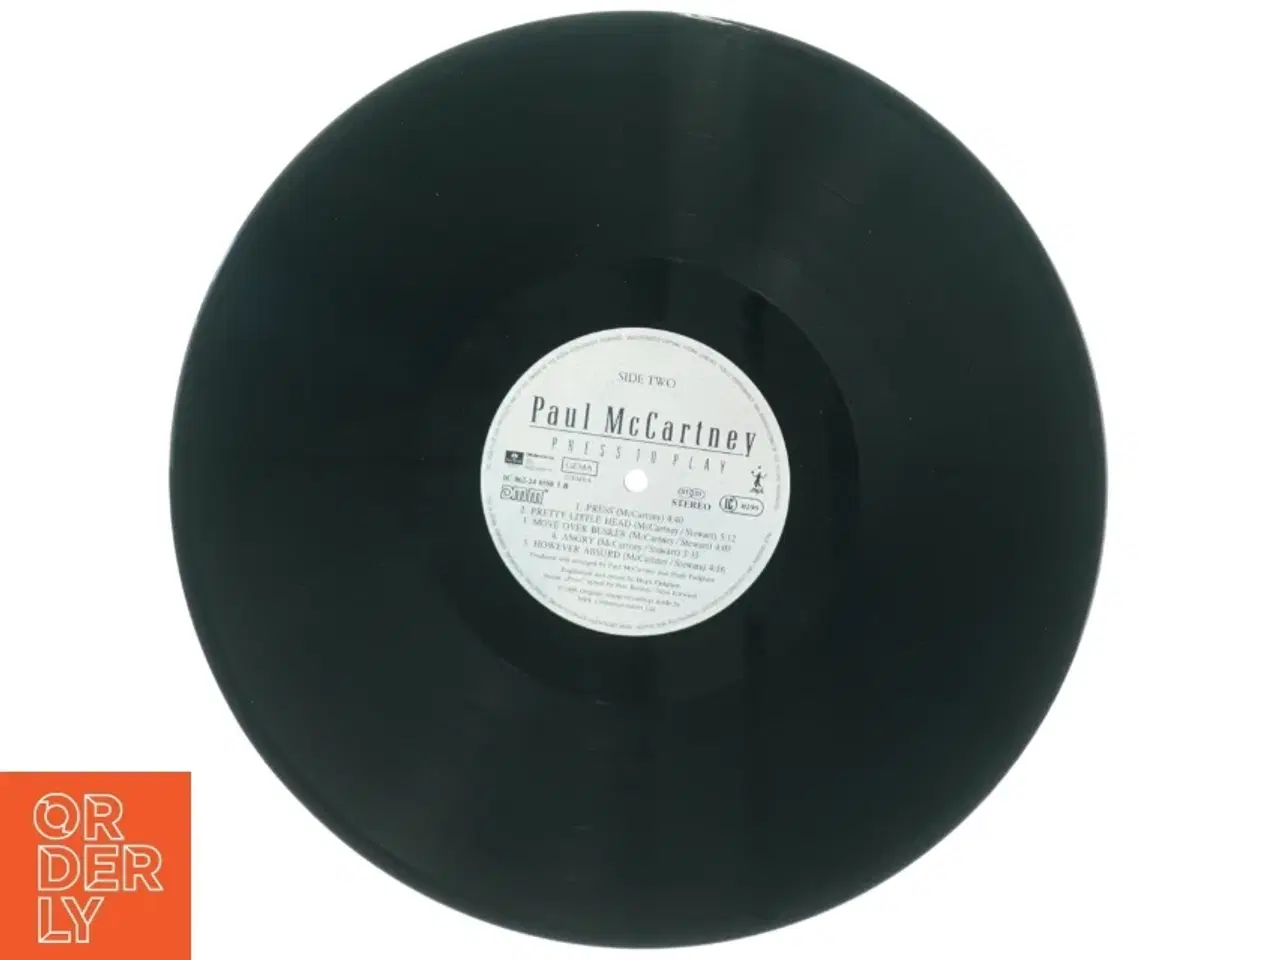 Billede 2 - Paul McCartney  'Press to Play' LP fra Parlophone (str. 31 x 31 cm)